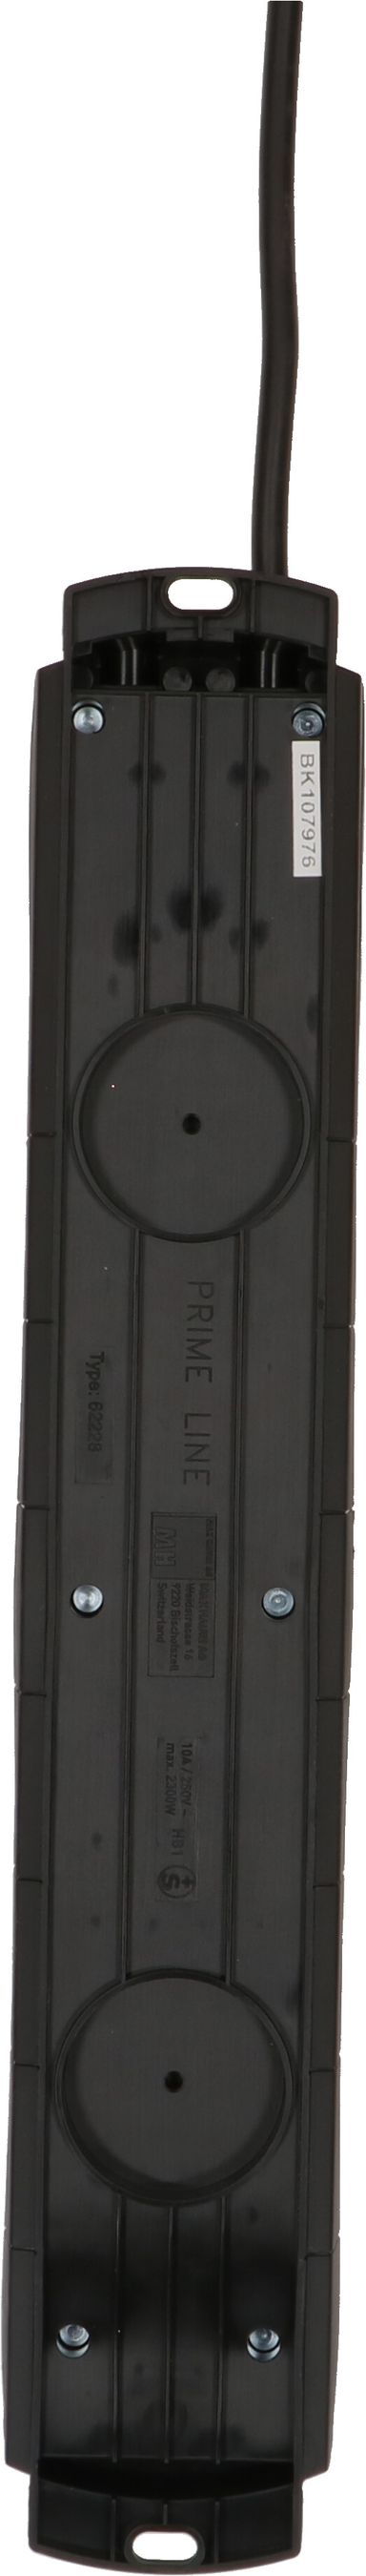 Steckdosenleiste Prime Line 8x Typ 13 schwarz 5m